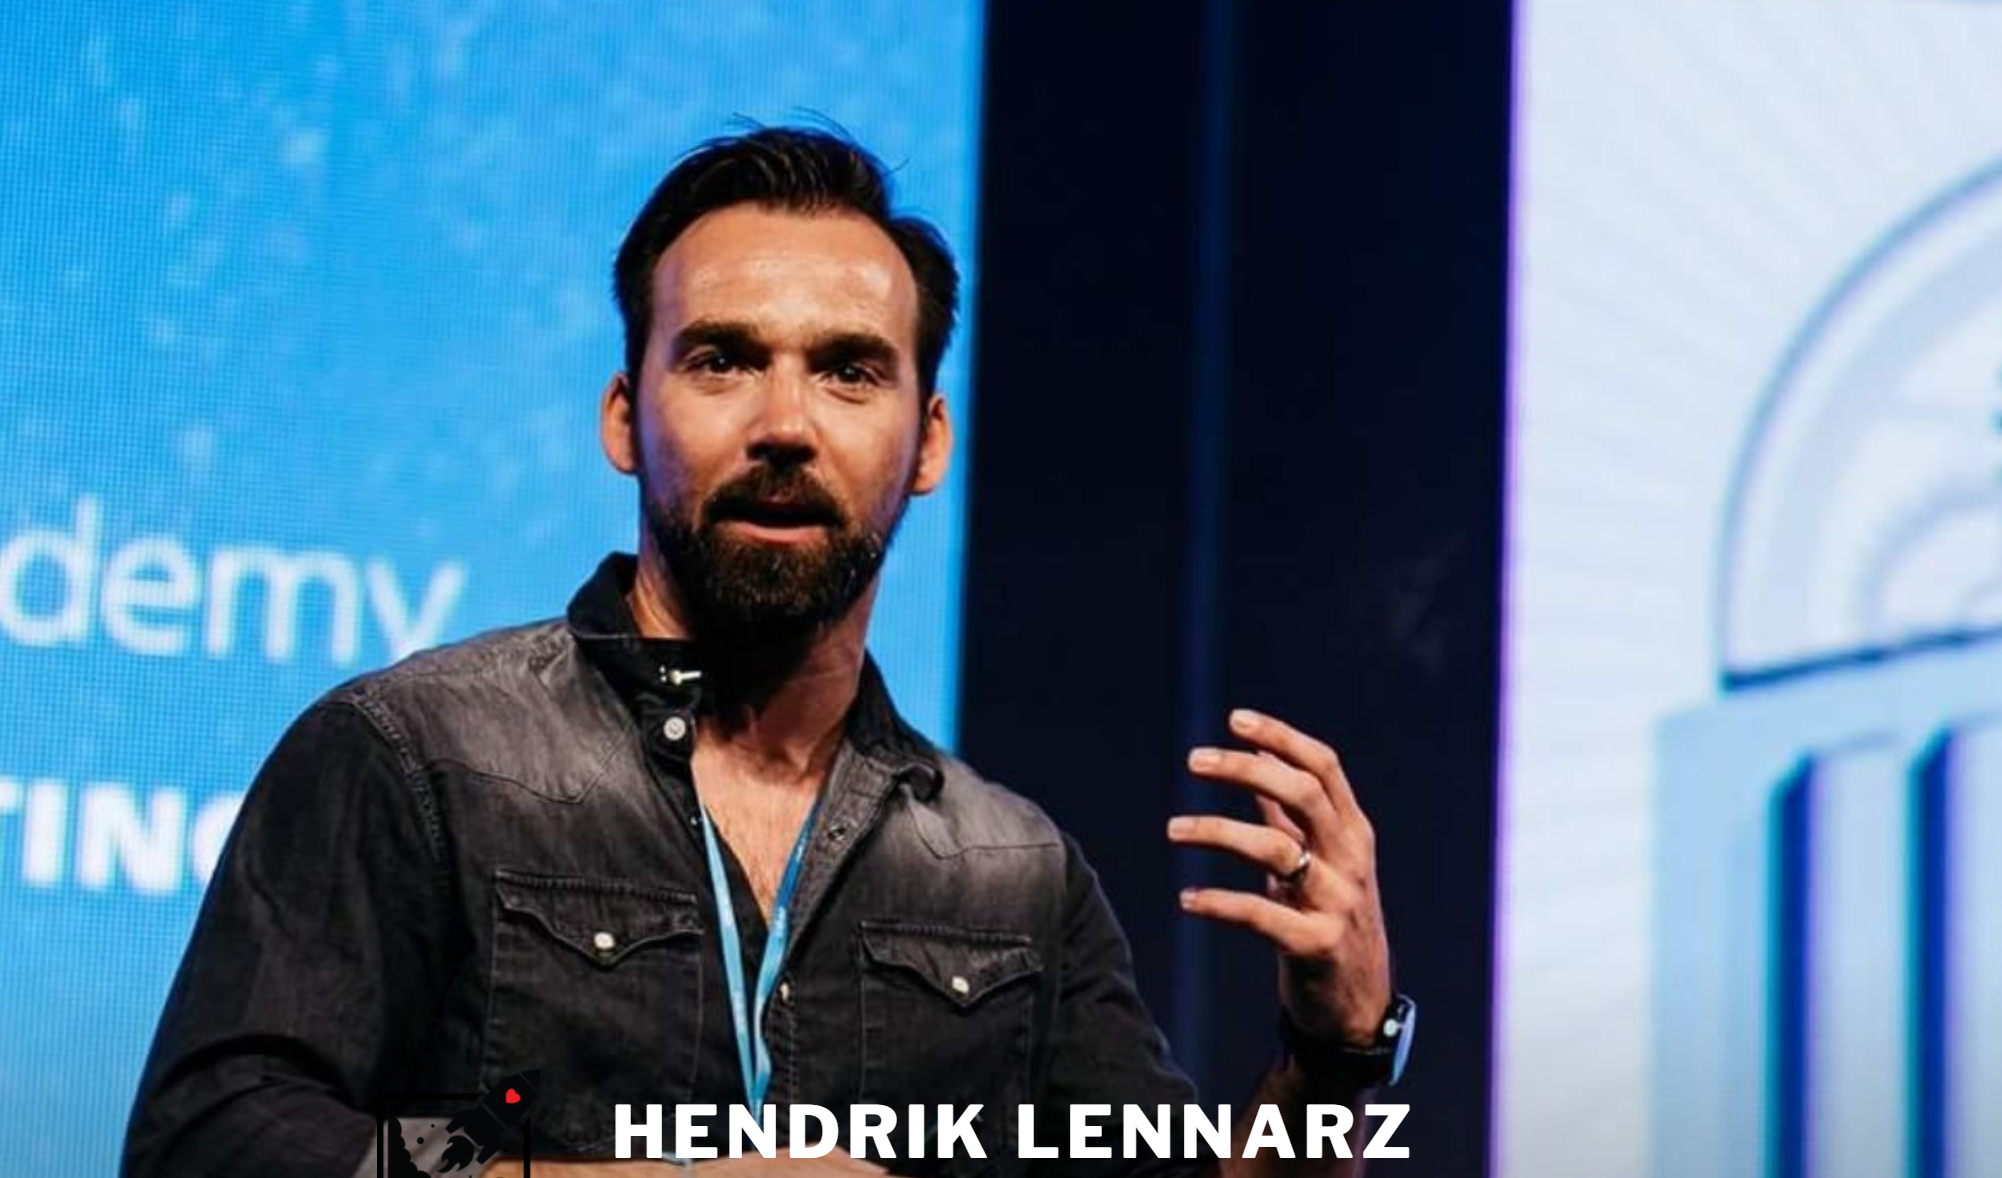  Hendrik Lennarz Interview About Growth Hacking at SMXL MIlan 2018